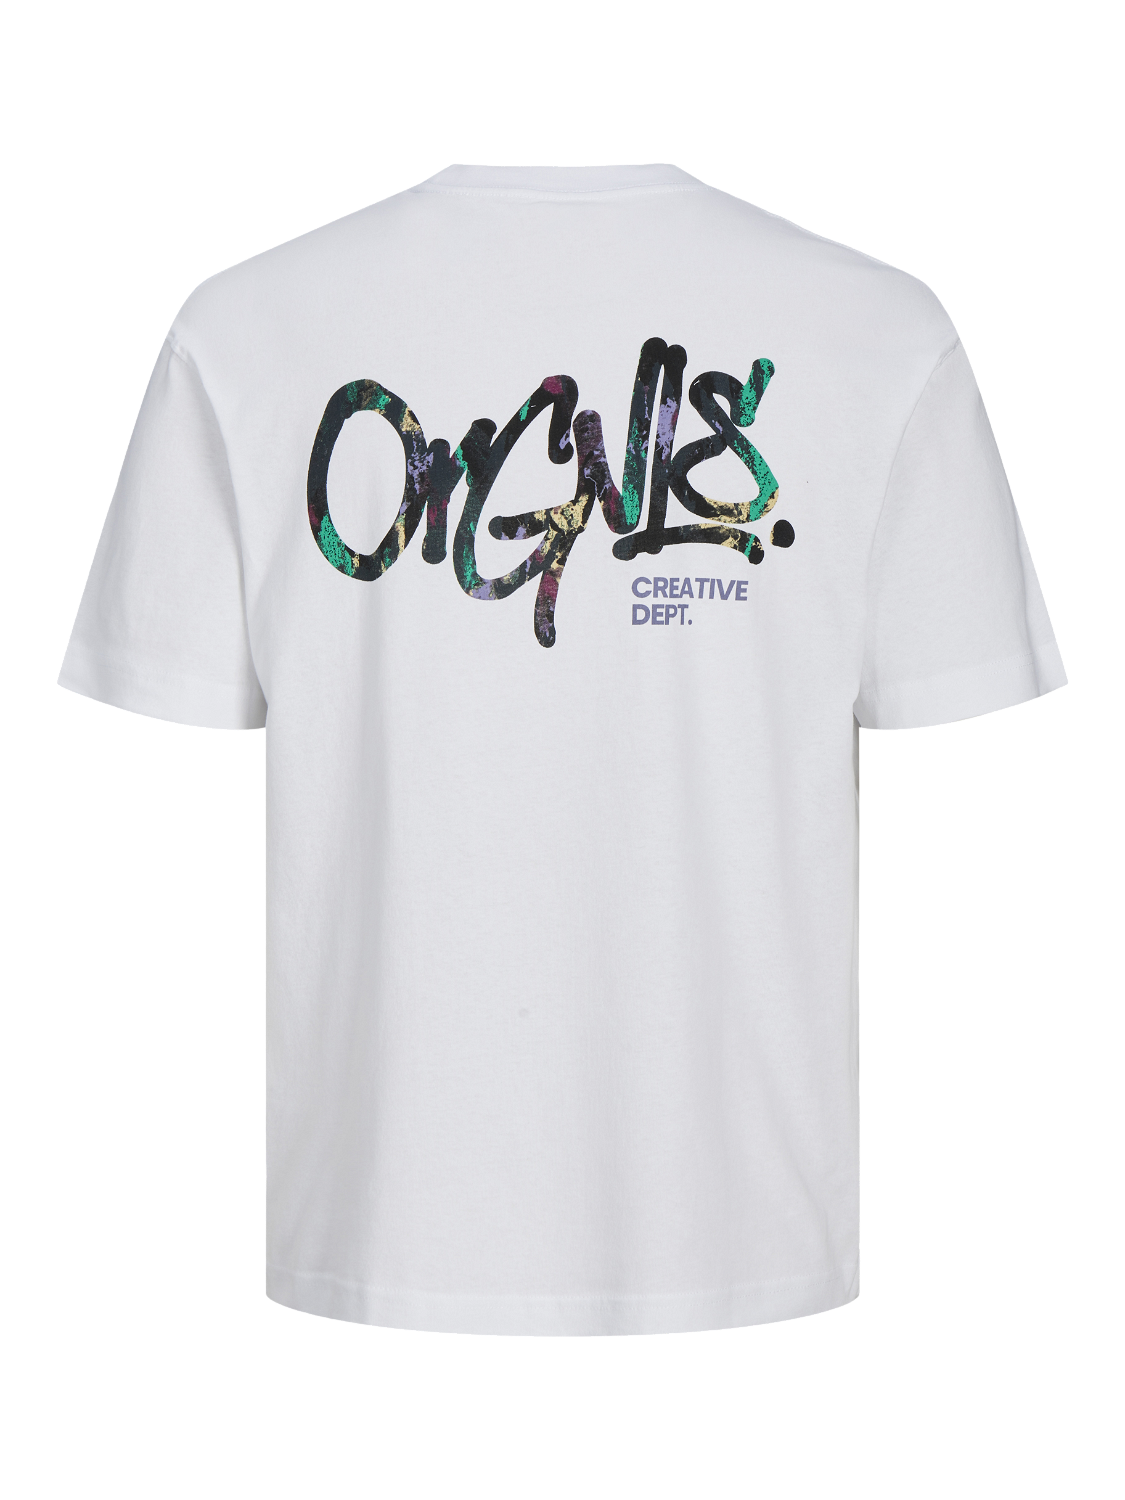 Camiseta de manga corta estampado Originals blanco - JORSILVERLAKE